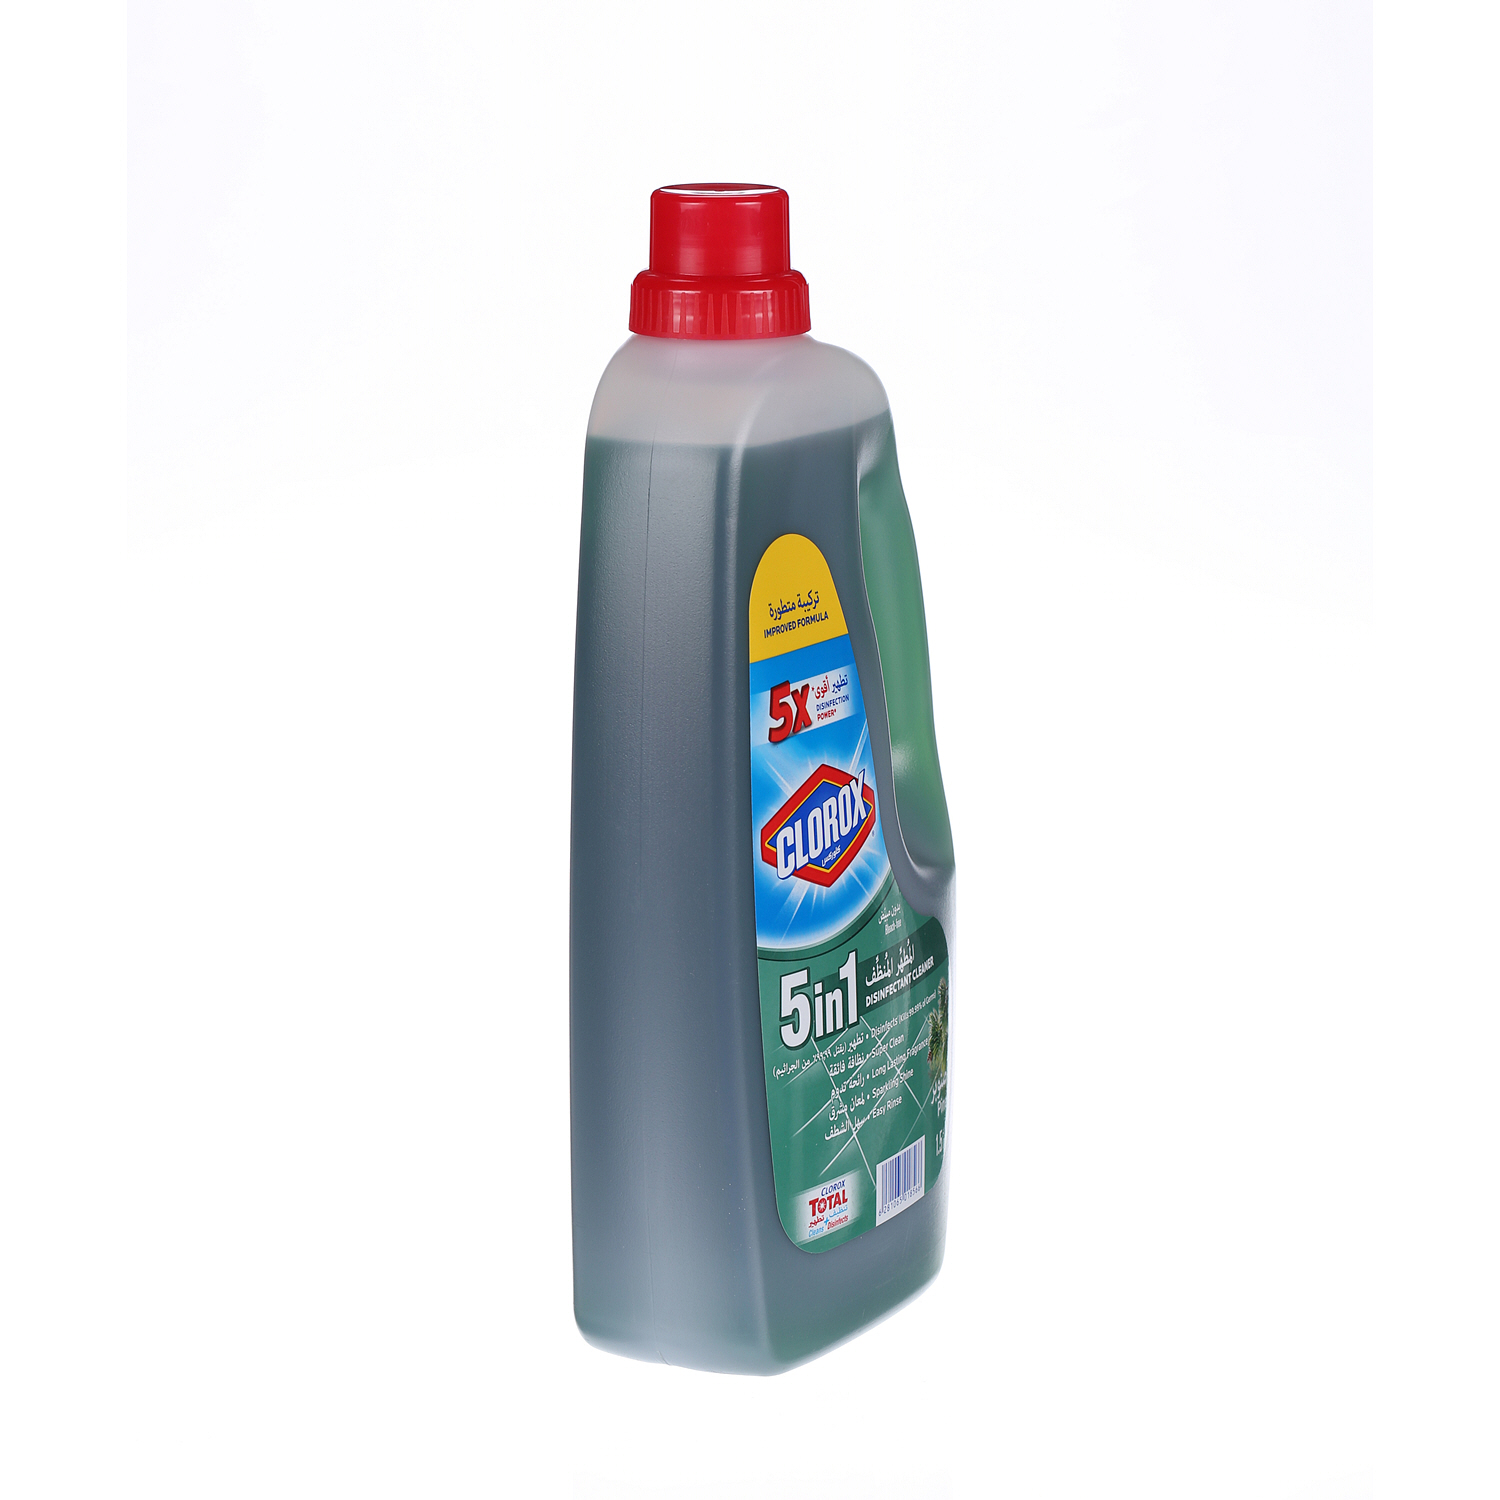 Clorox Disinfectant Cleaner non Bleach Pine 1.5Ltr